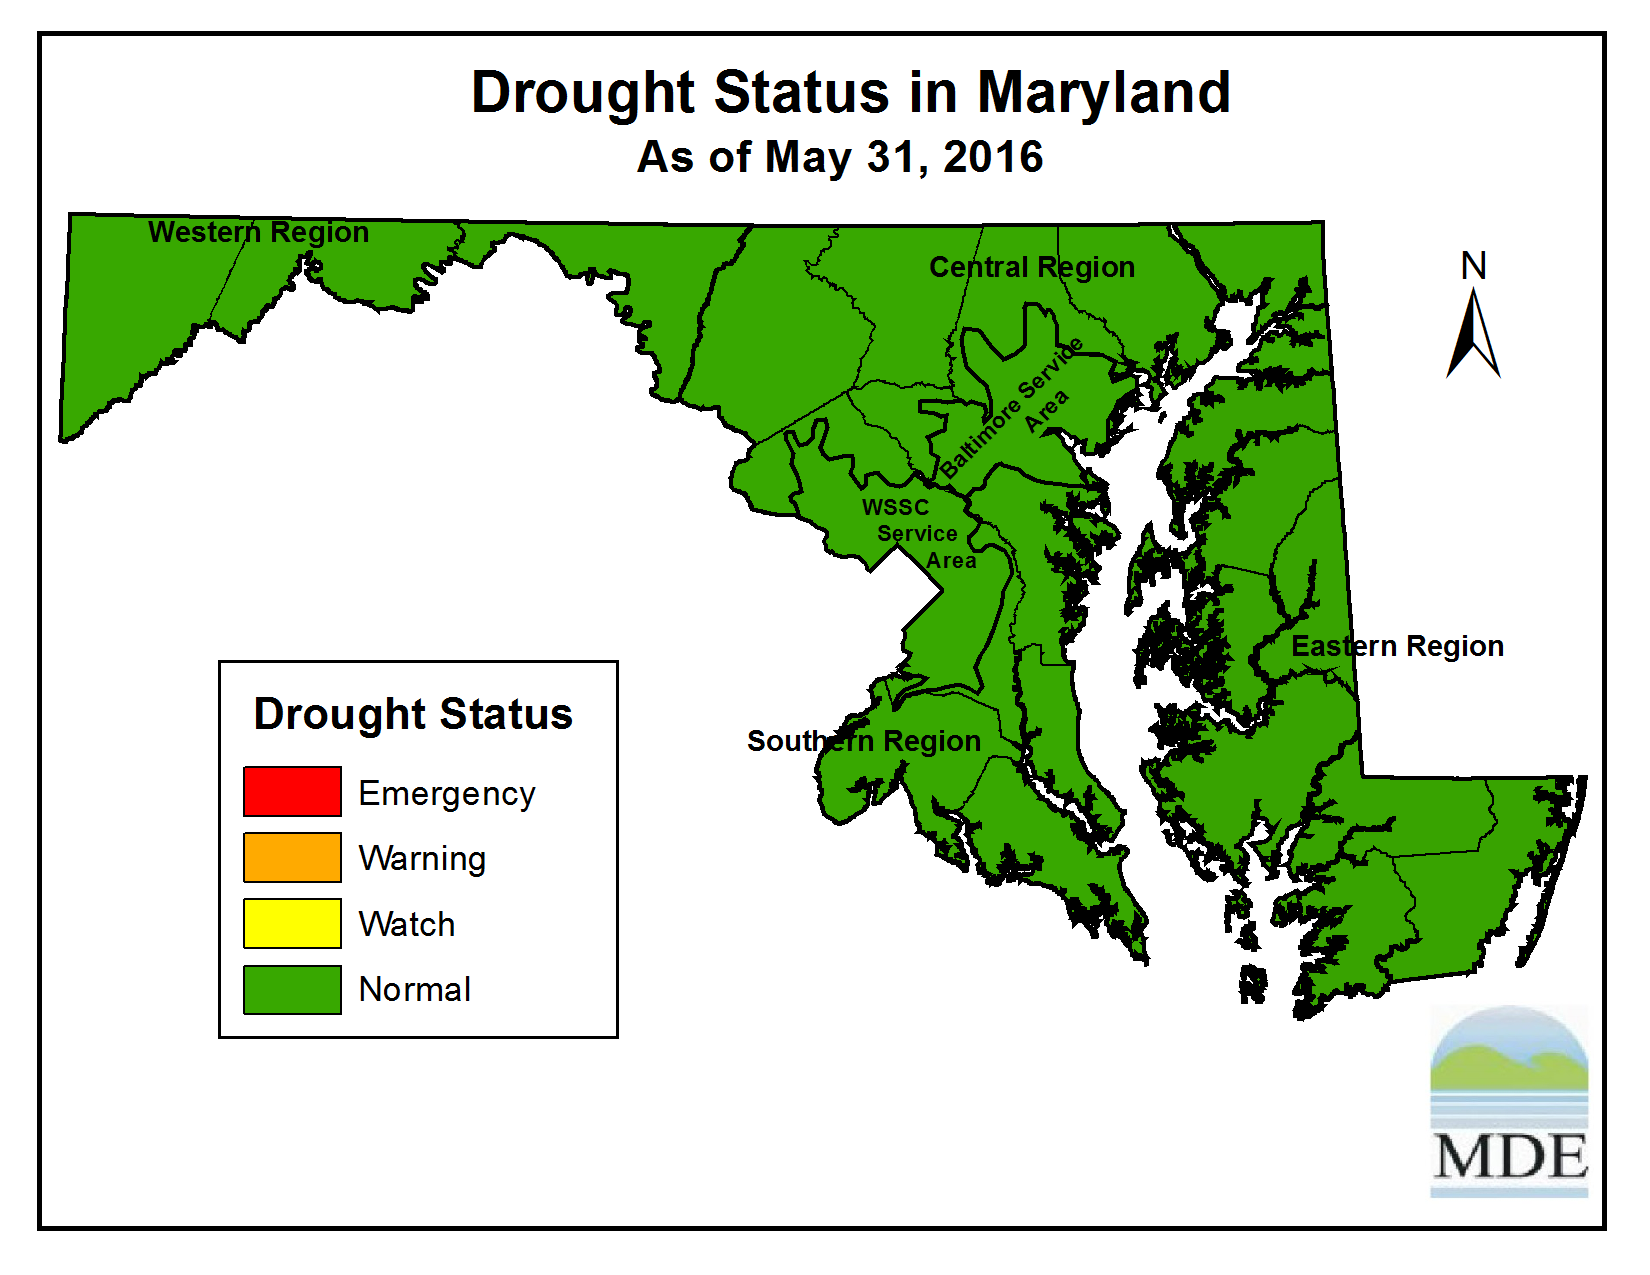 Drought Status as of May 31, 2016